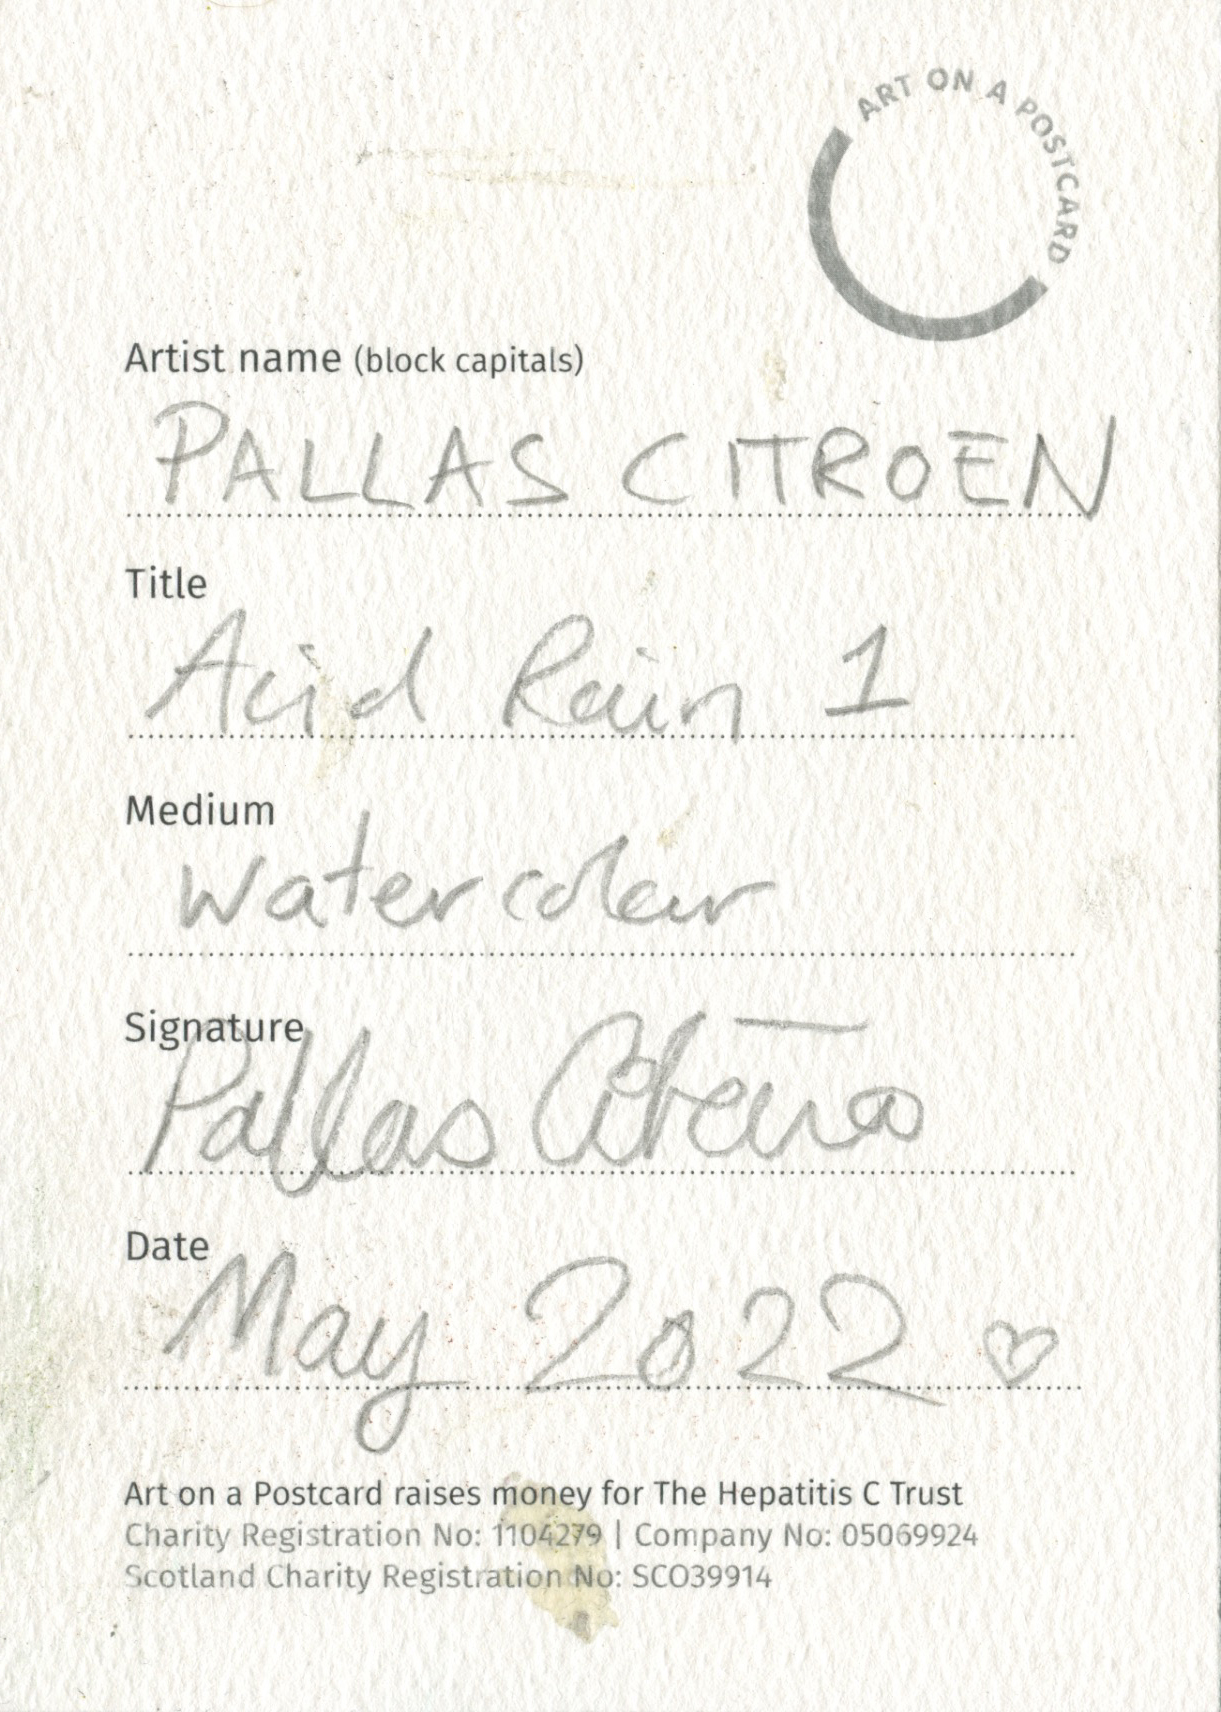 107. Pallas Citroen - Acid Rain 1 - BACK